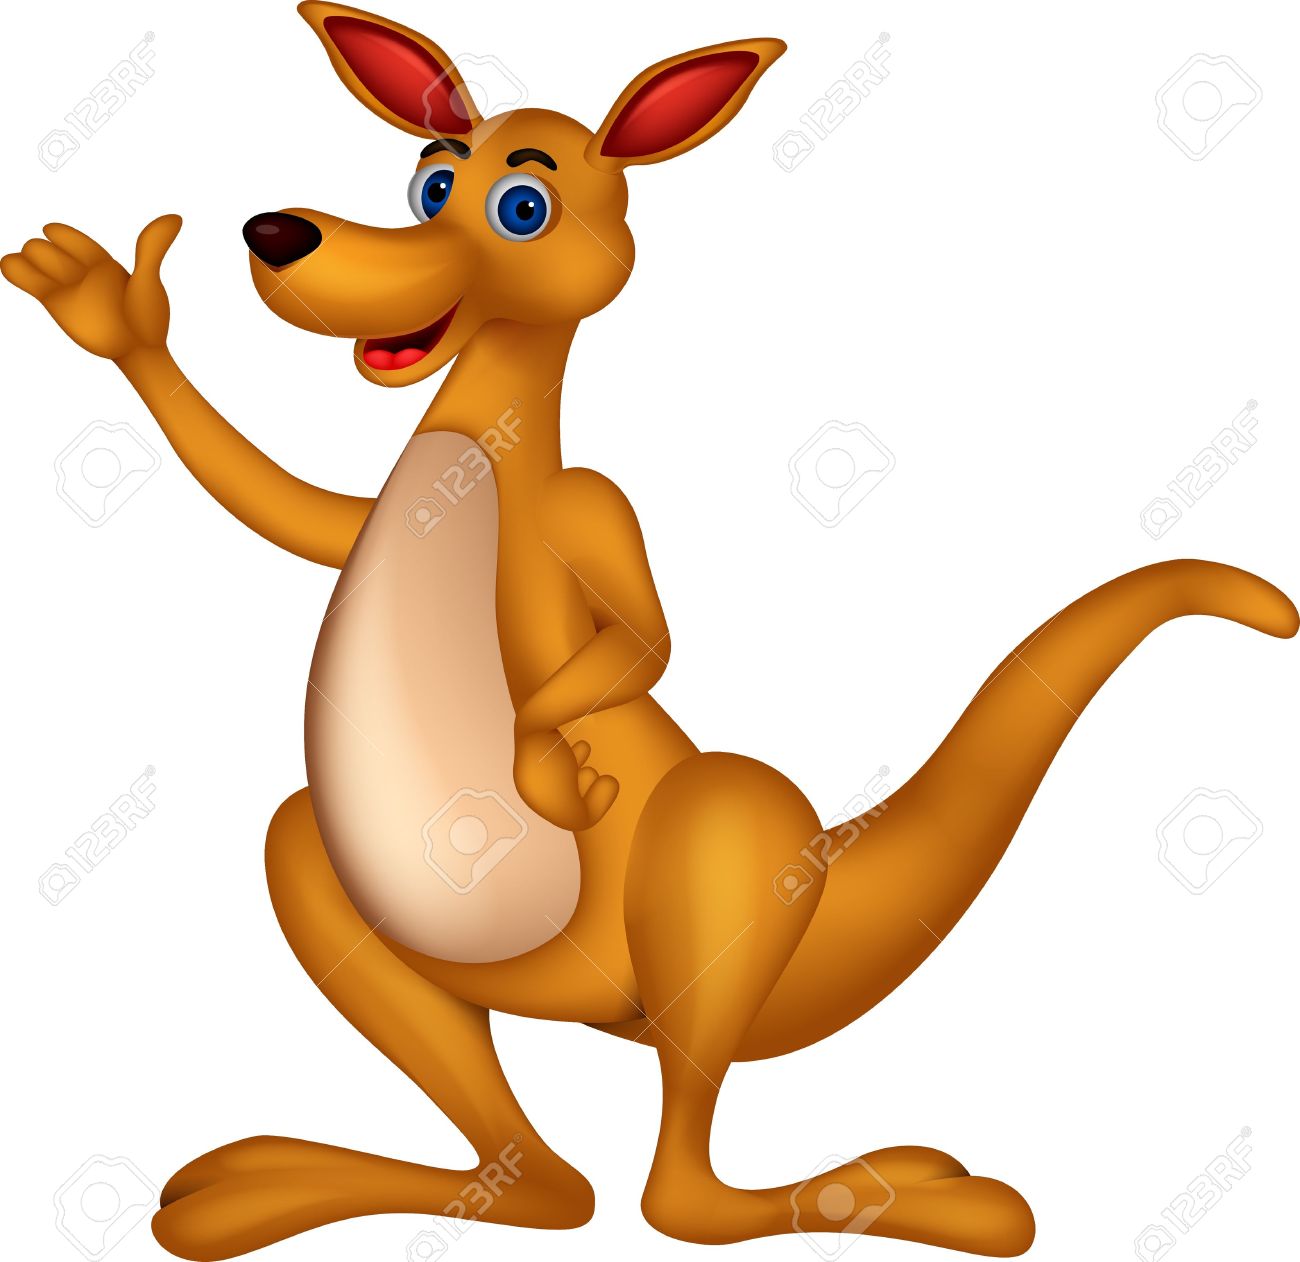 Australian animals free download. Kangaroo clipart aussie animal